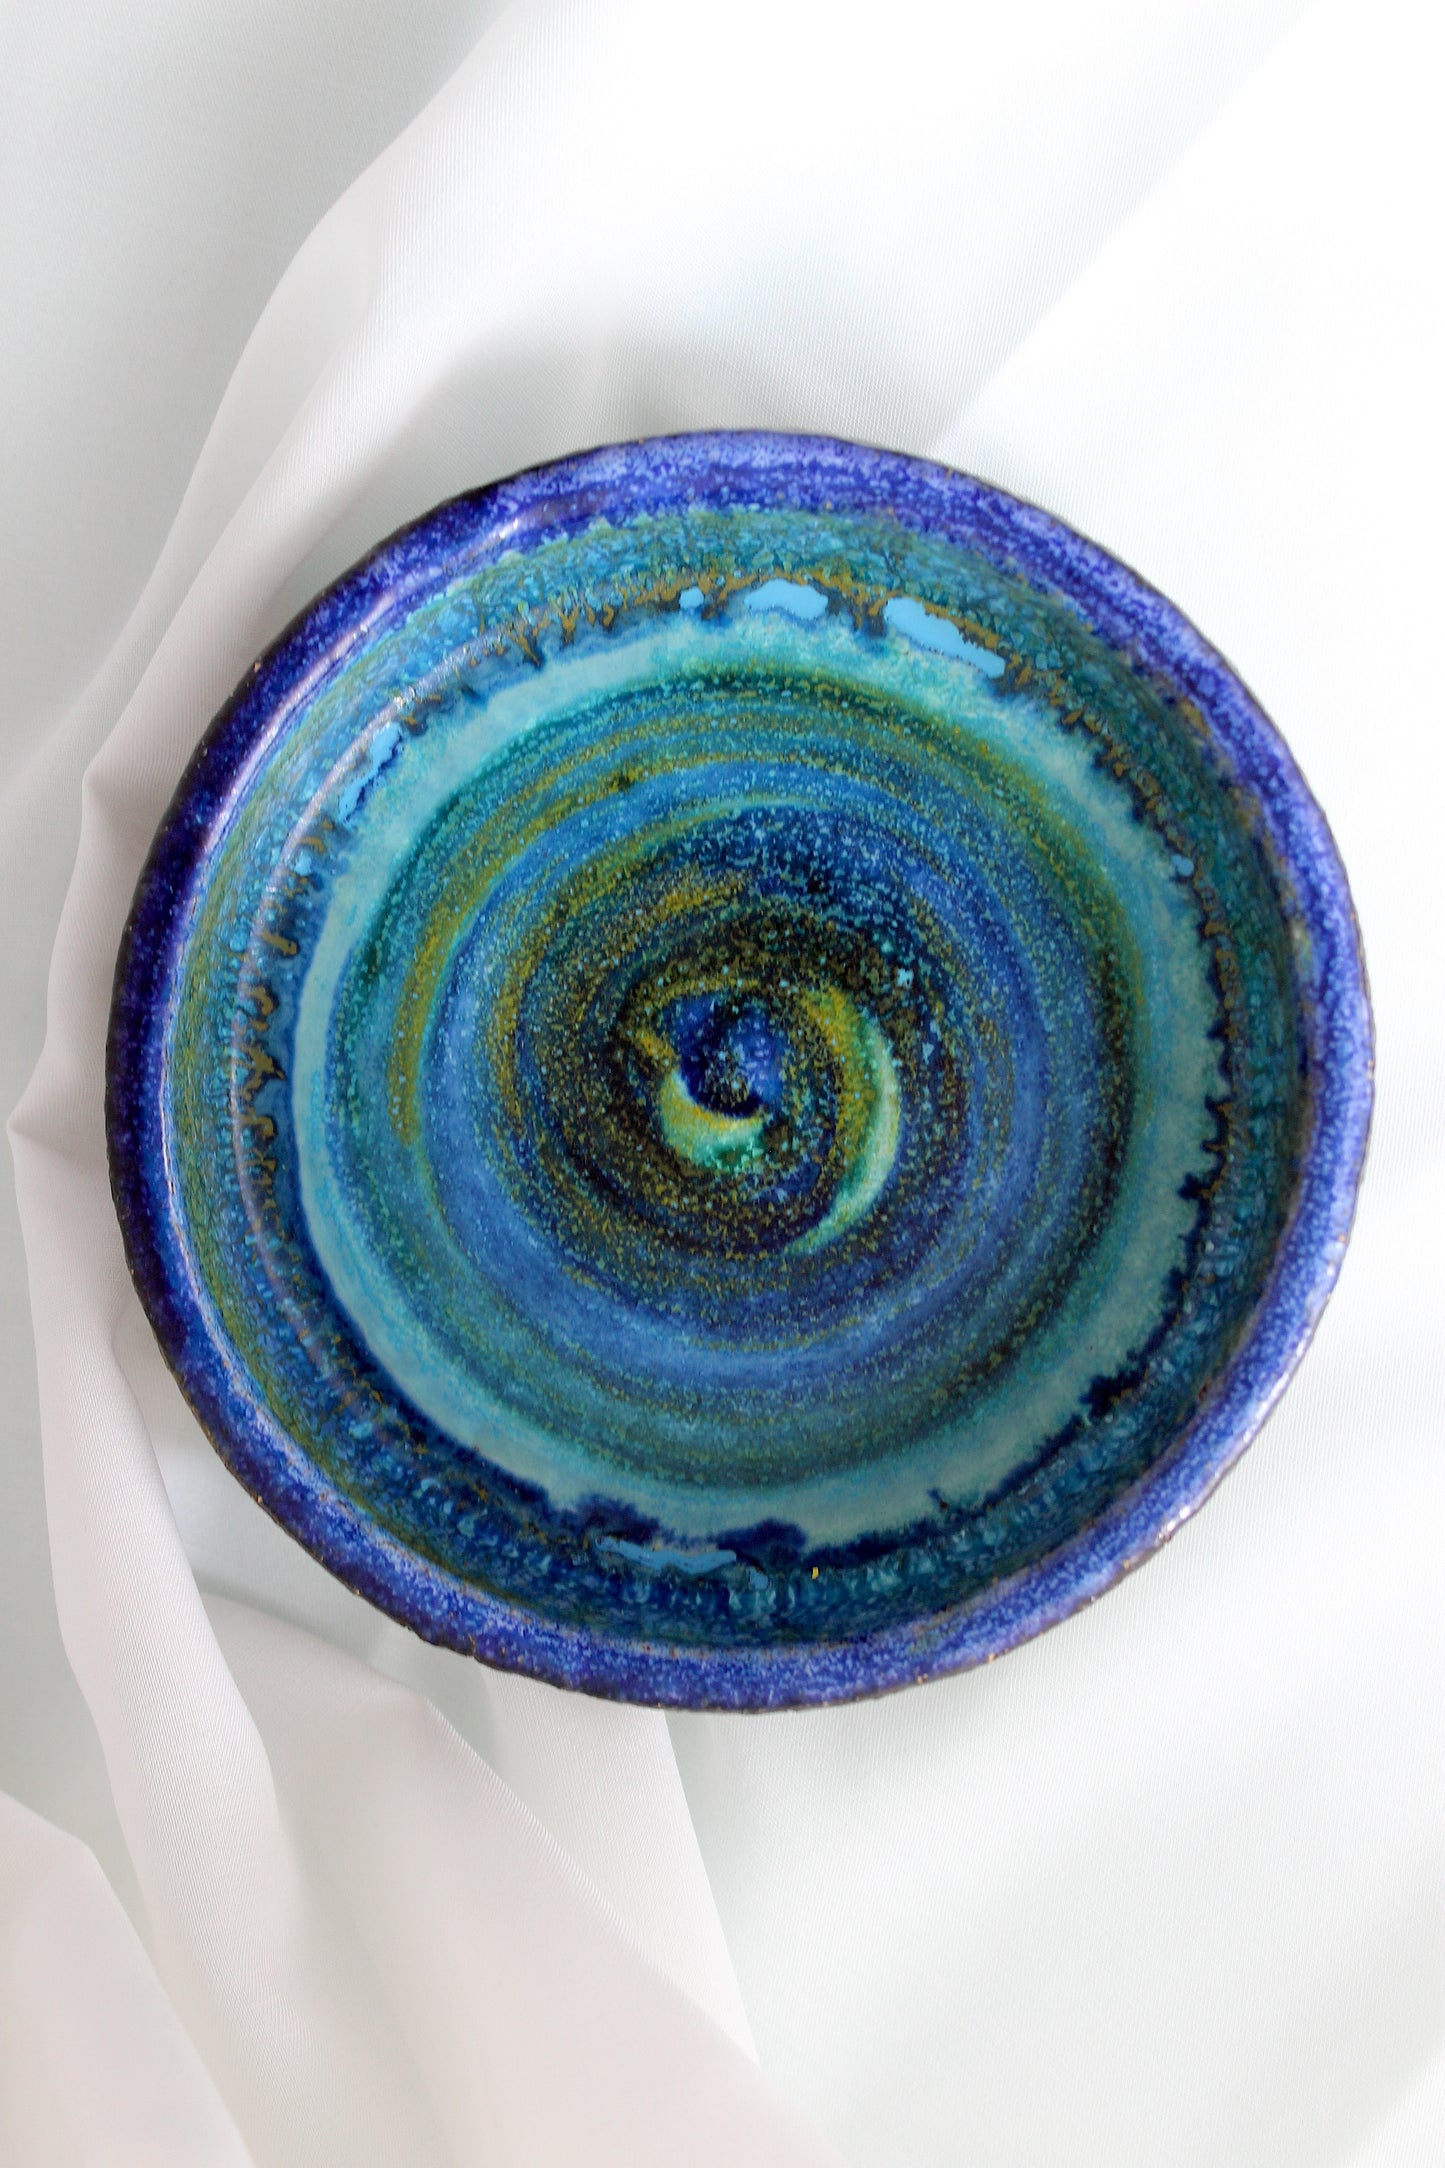 Bangholm - Skål, keramik